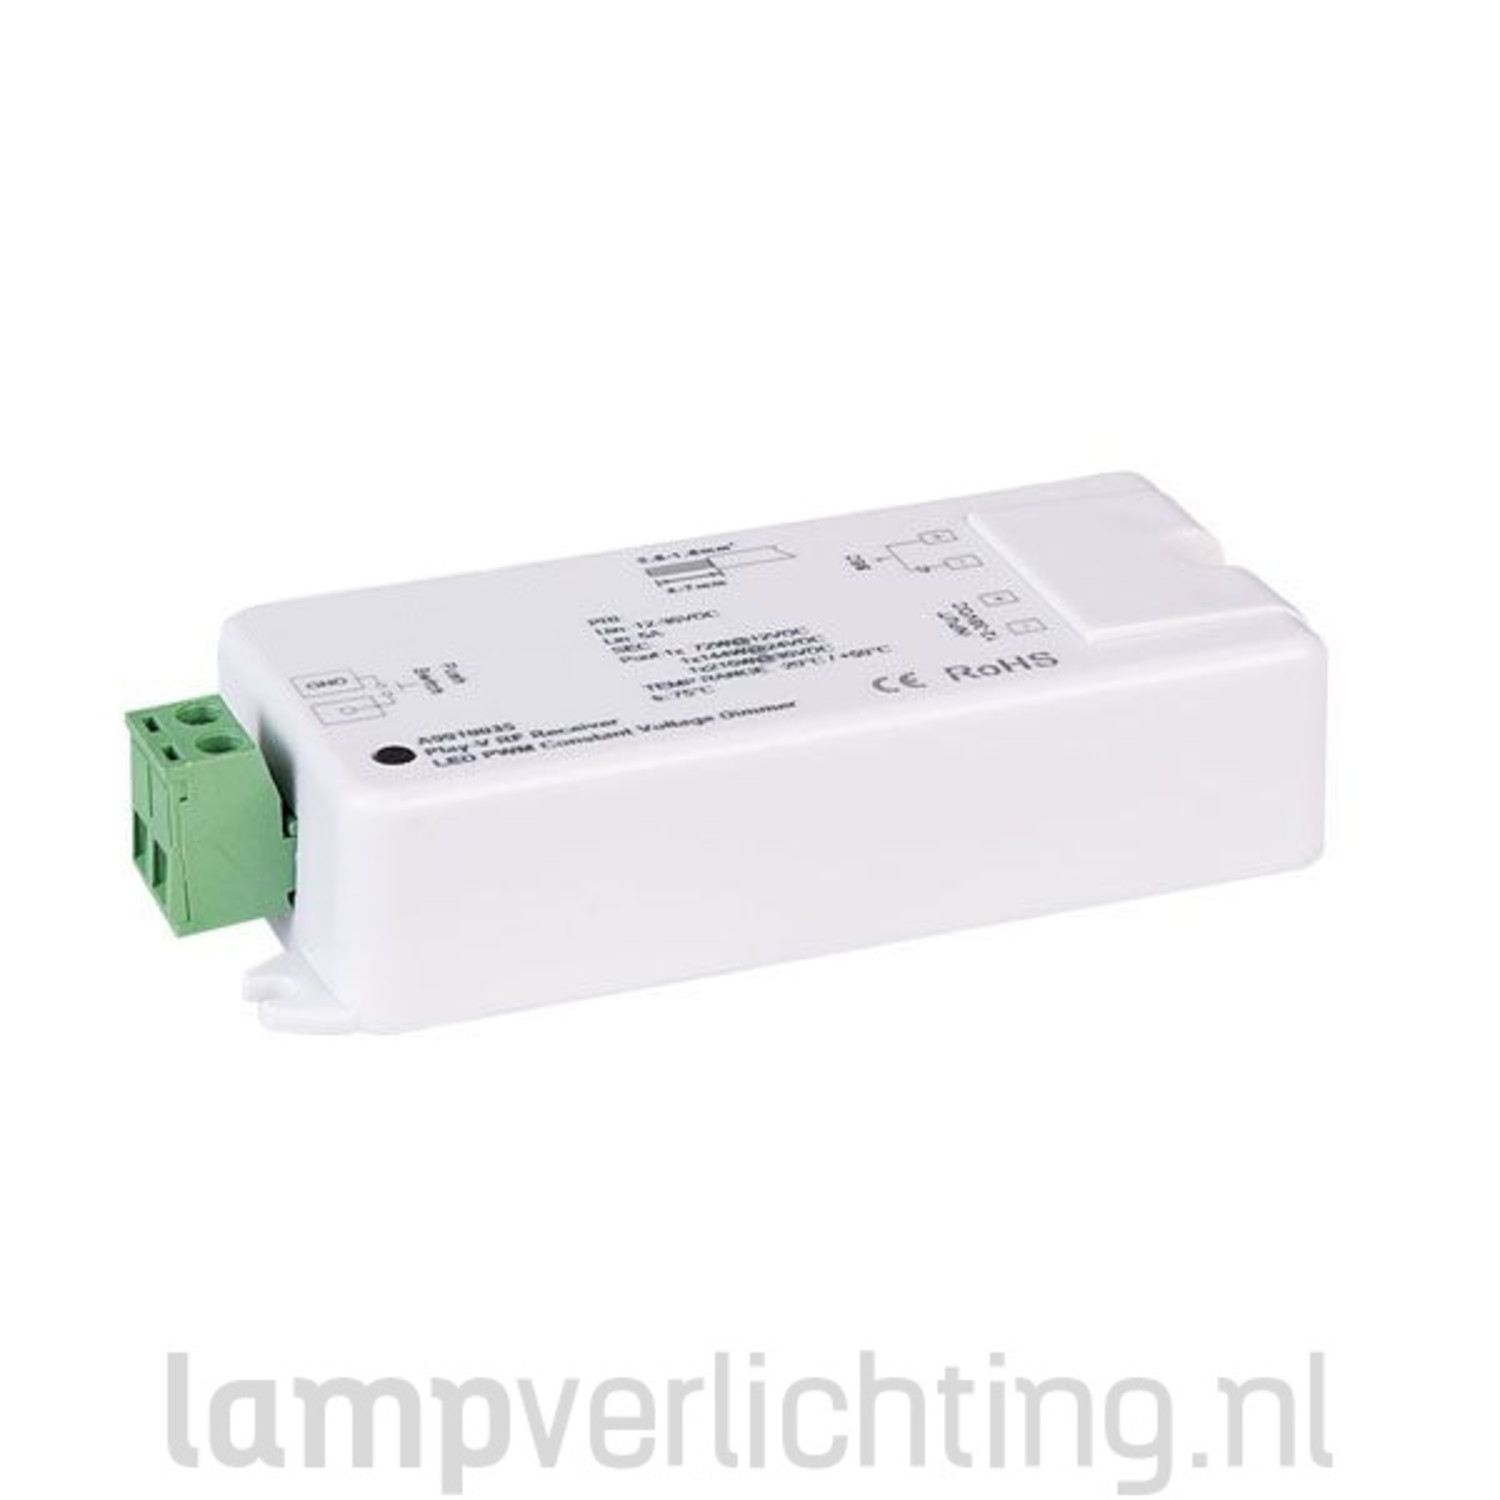 Editie maak het plat Spijsverteringsorgaan LED Dimmer voor 12-24V-36V DC ledverlichting - Direct leverbaar -  LampVerlichting.nl